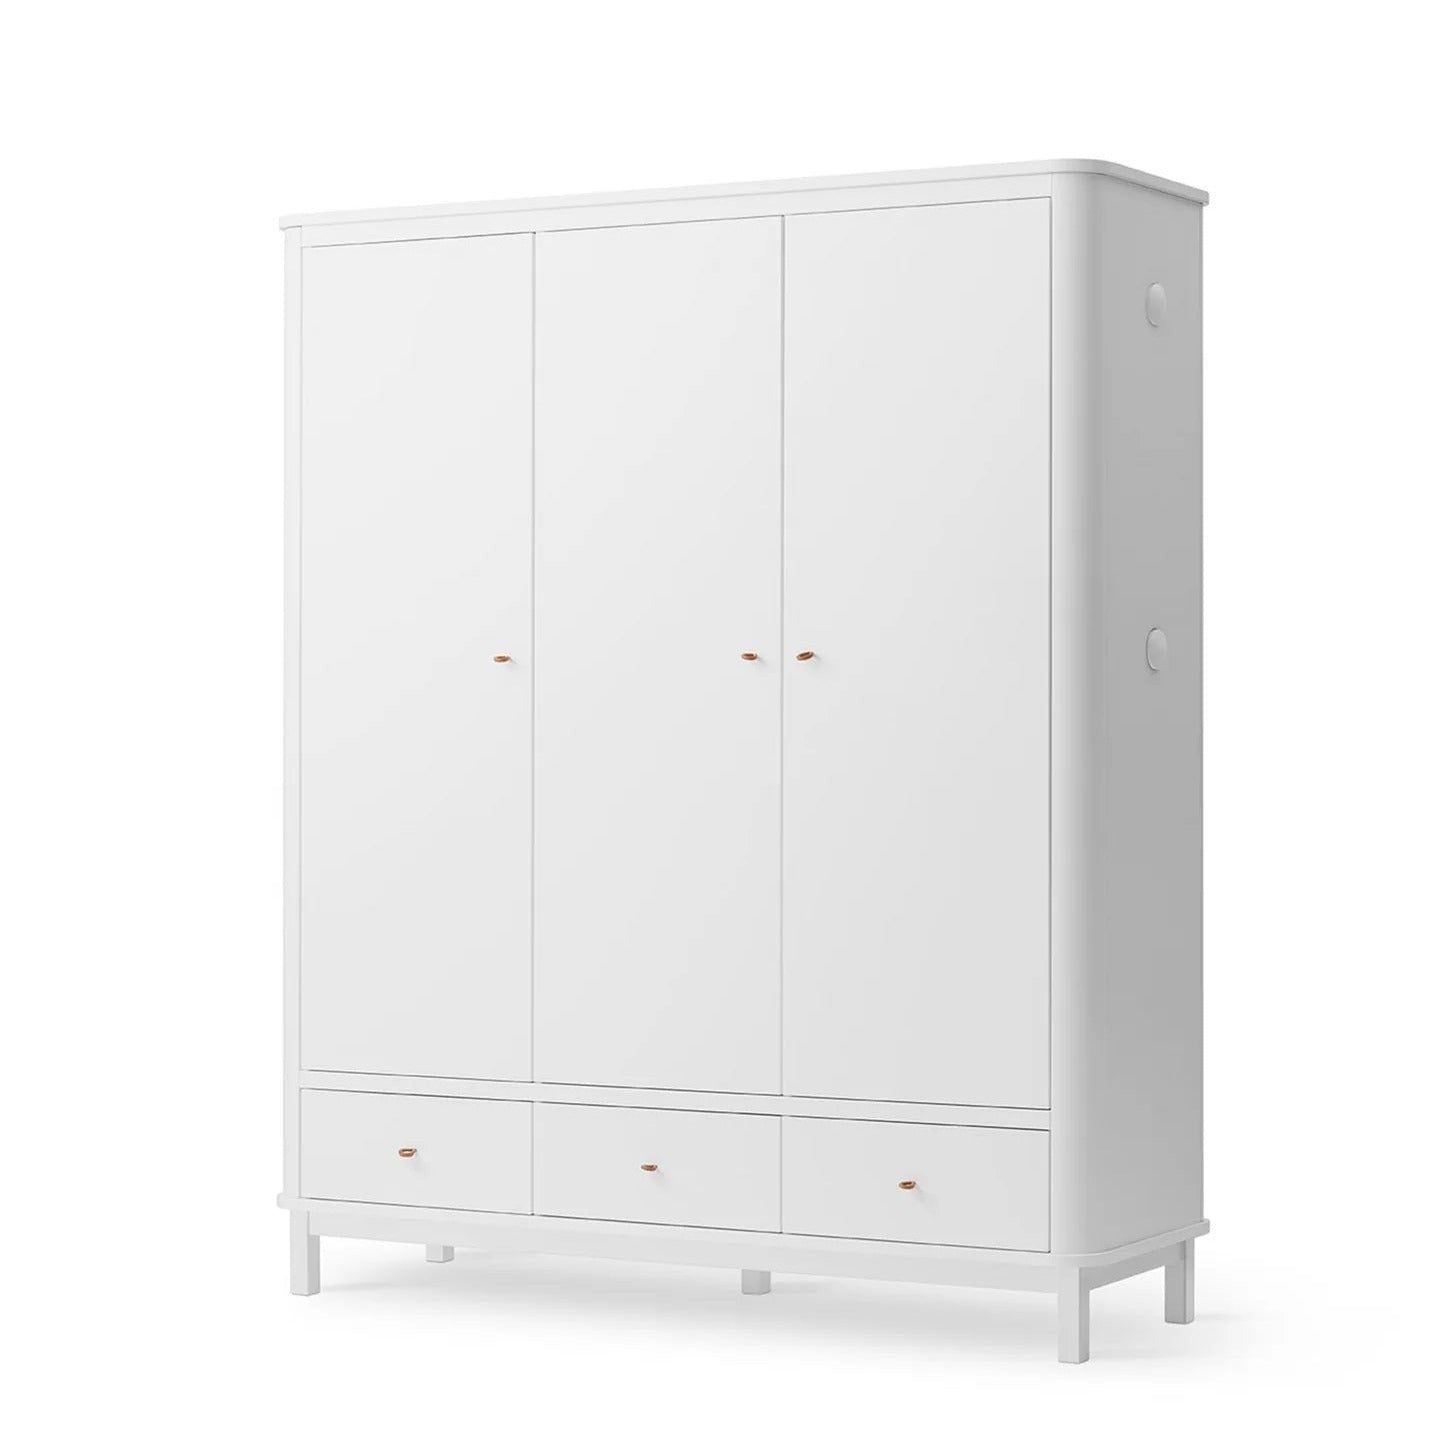 Oliver Furniture Wood Wardrobe - 3 Doors - White